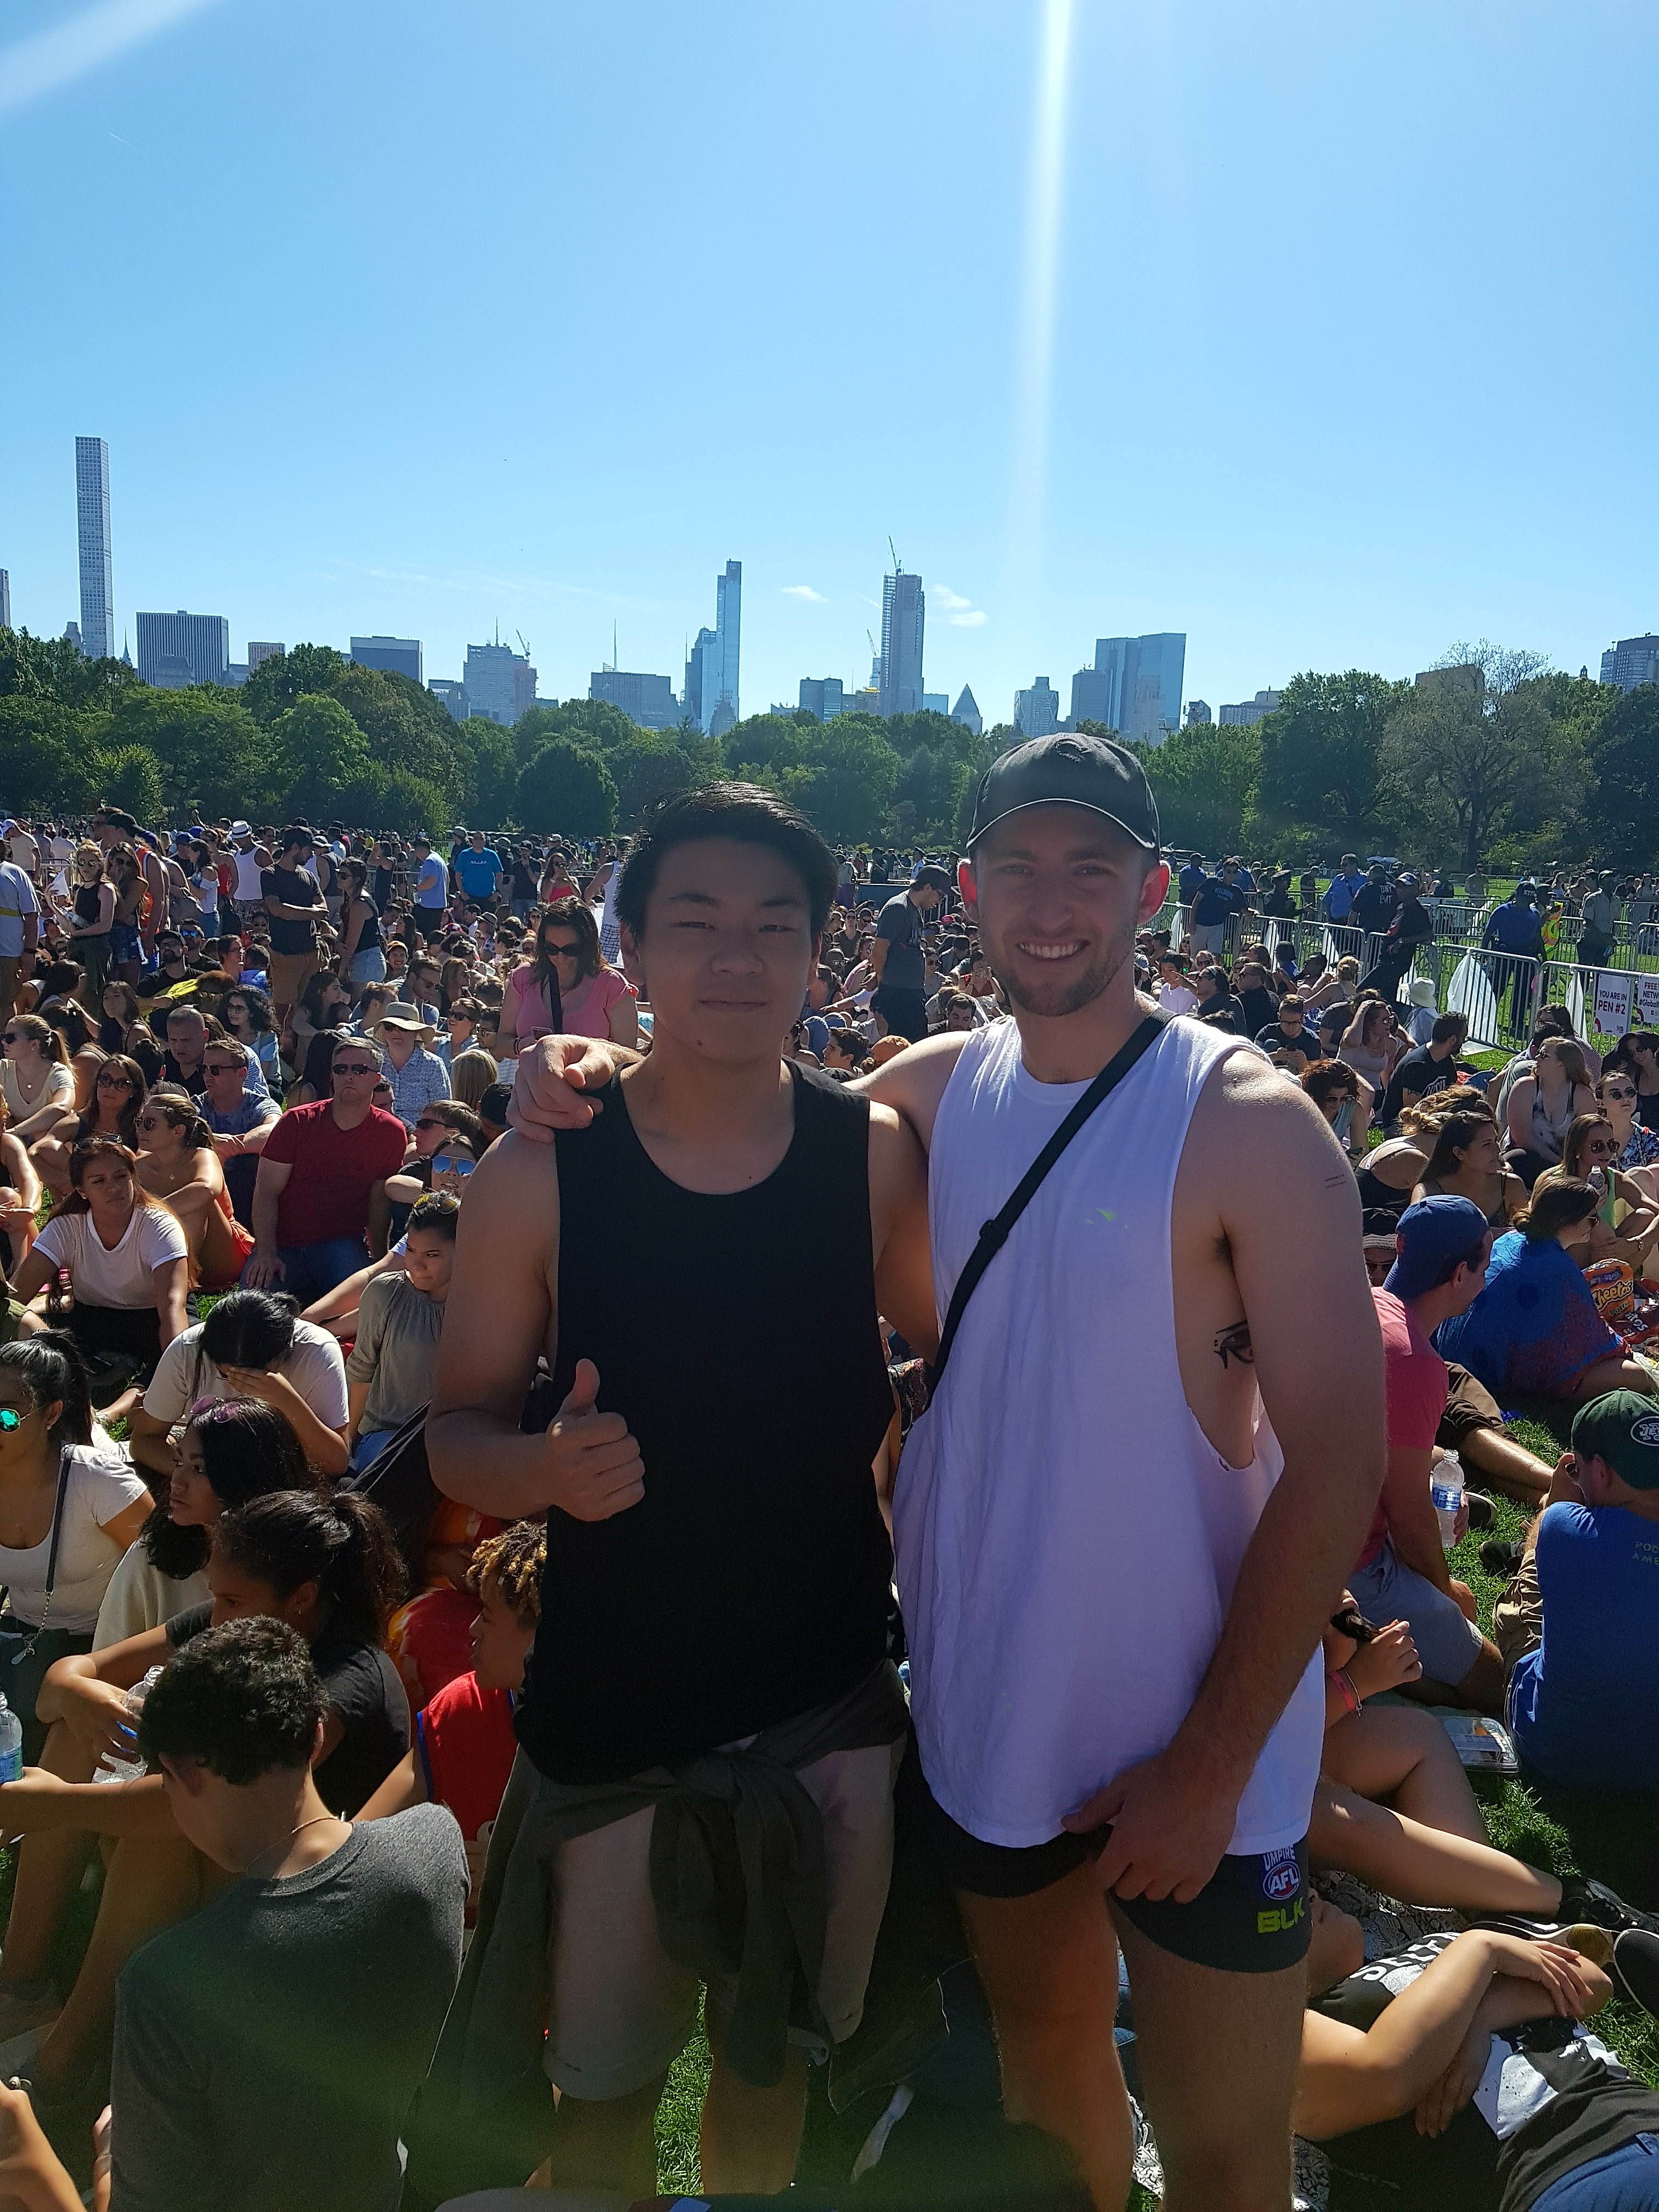 Two men posing in a crowd